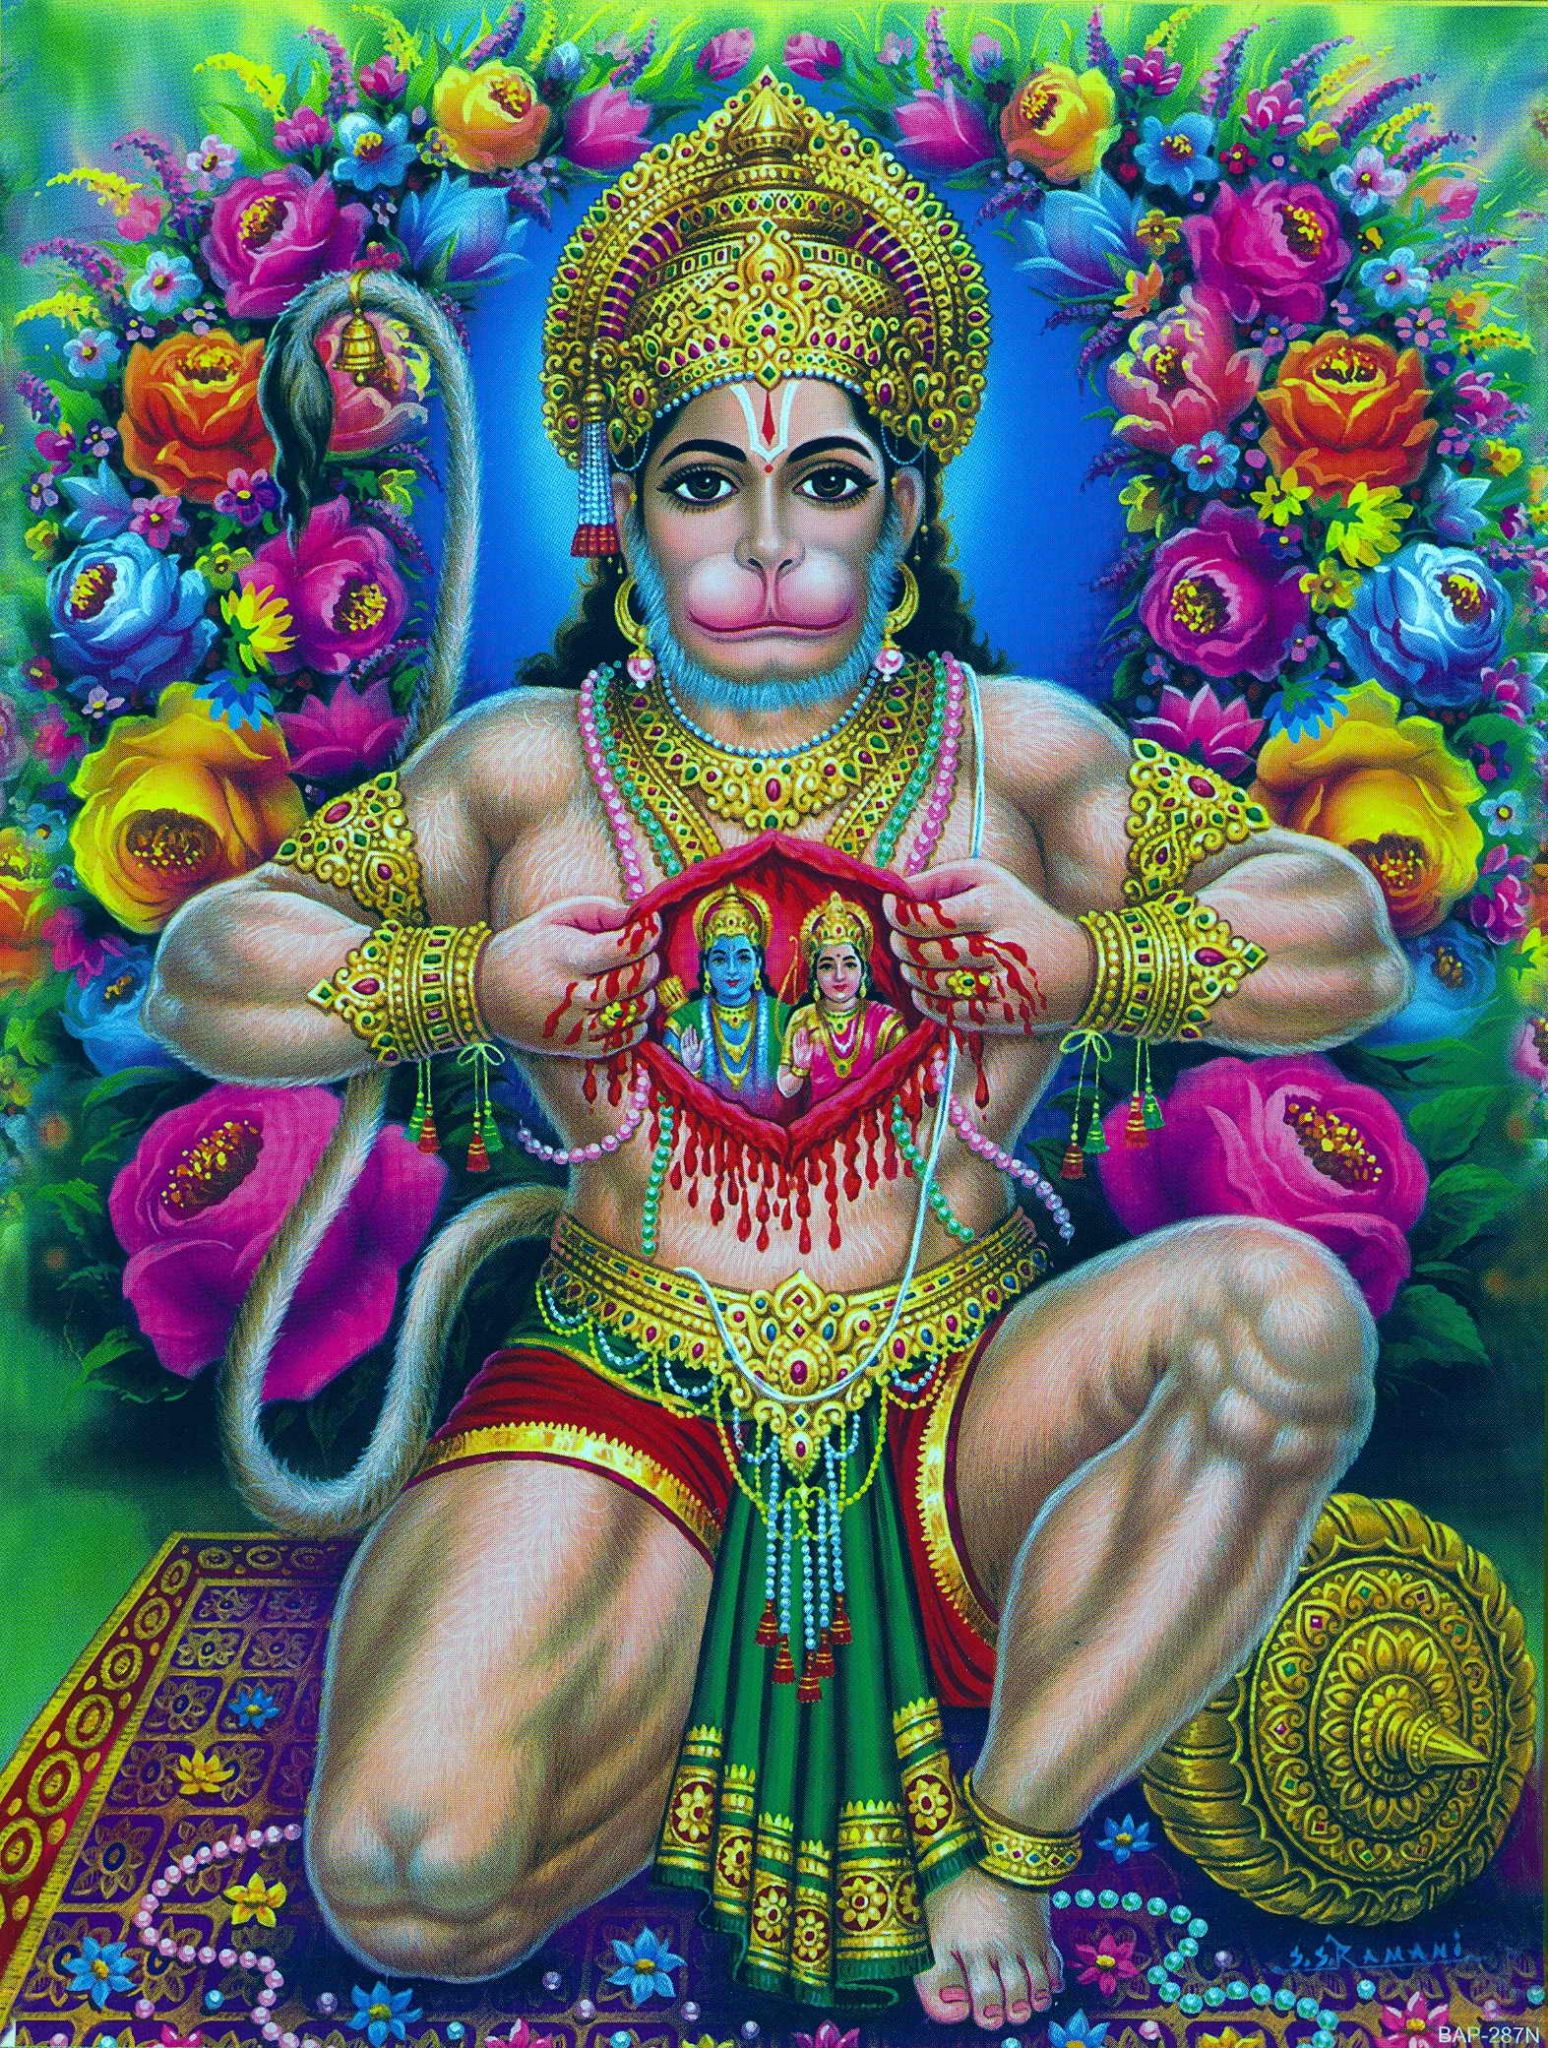 Lord Hanuman Wallpaper Download for Free - Wallpaper Id - 214